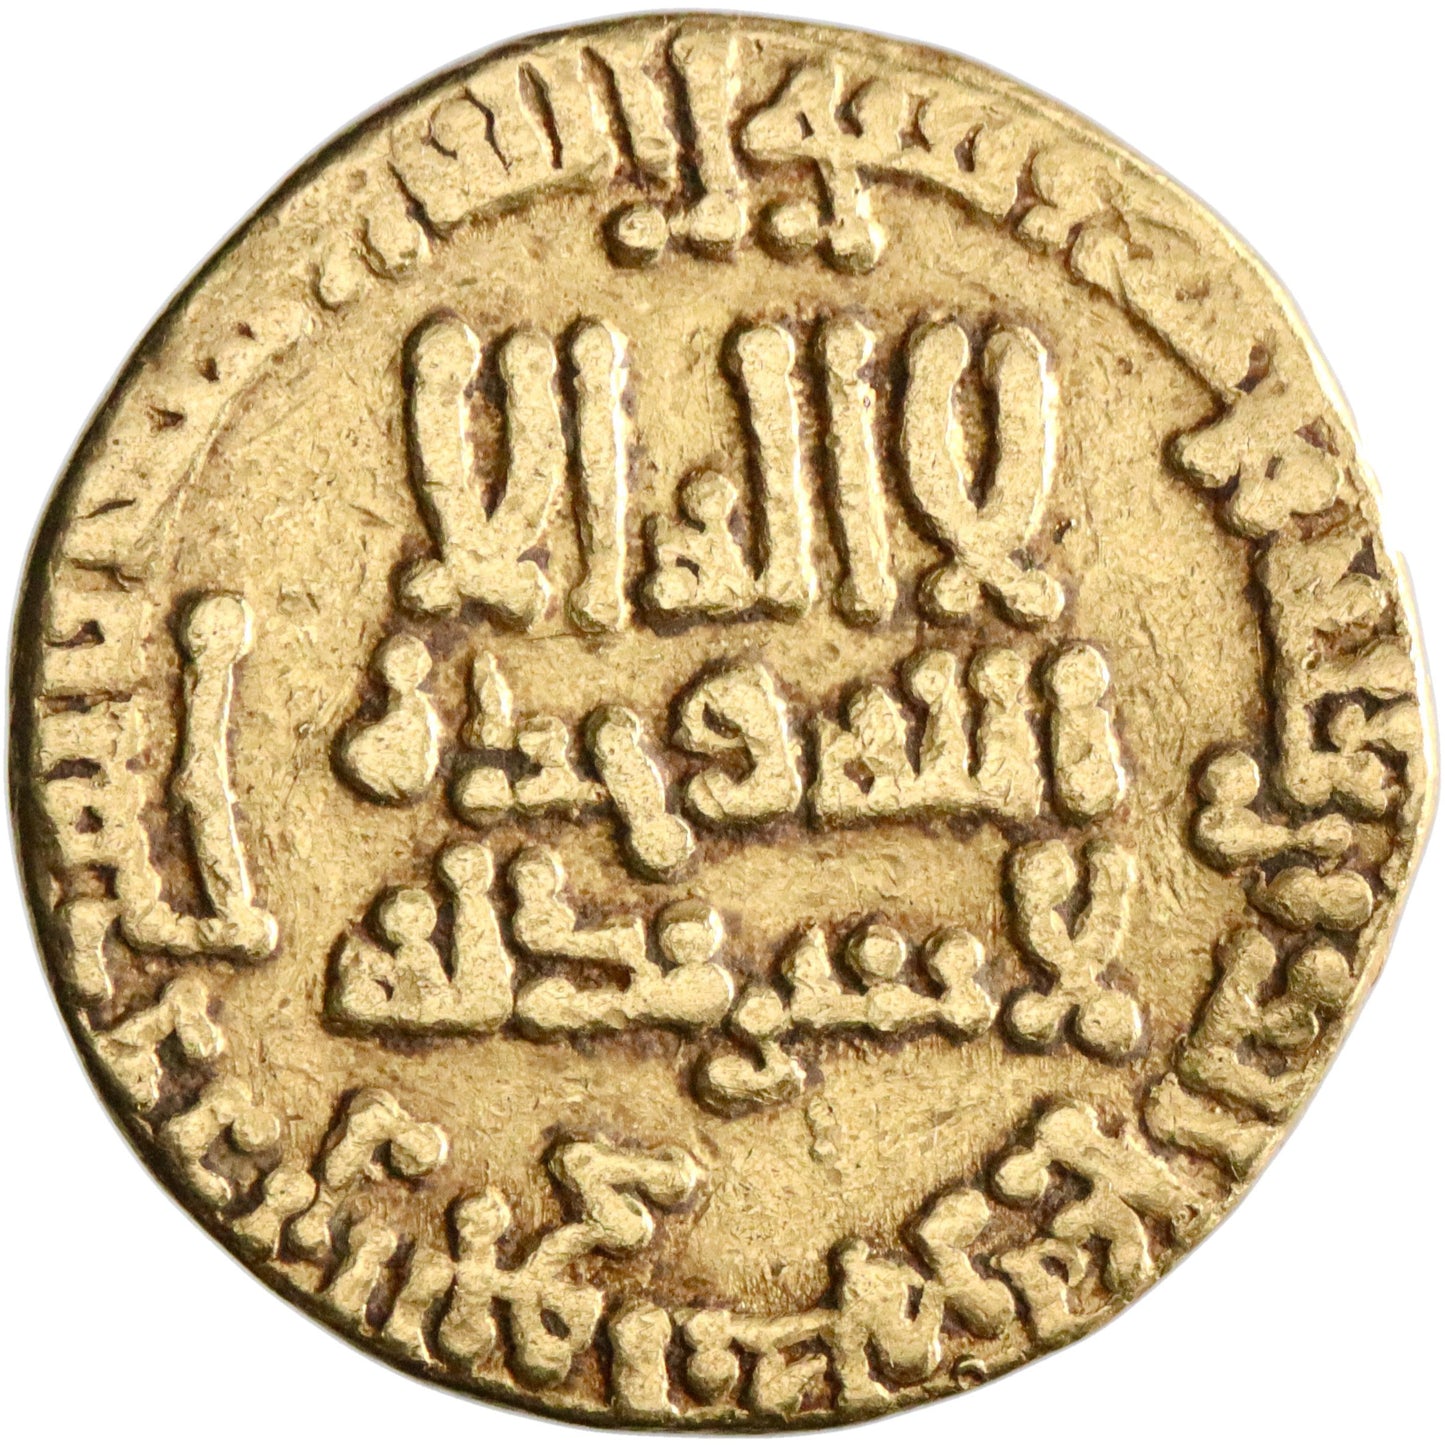 Abbasid, Harun al-Rashid, gold dinar, AH 190. "lil-khalifa" type